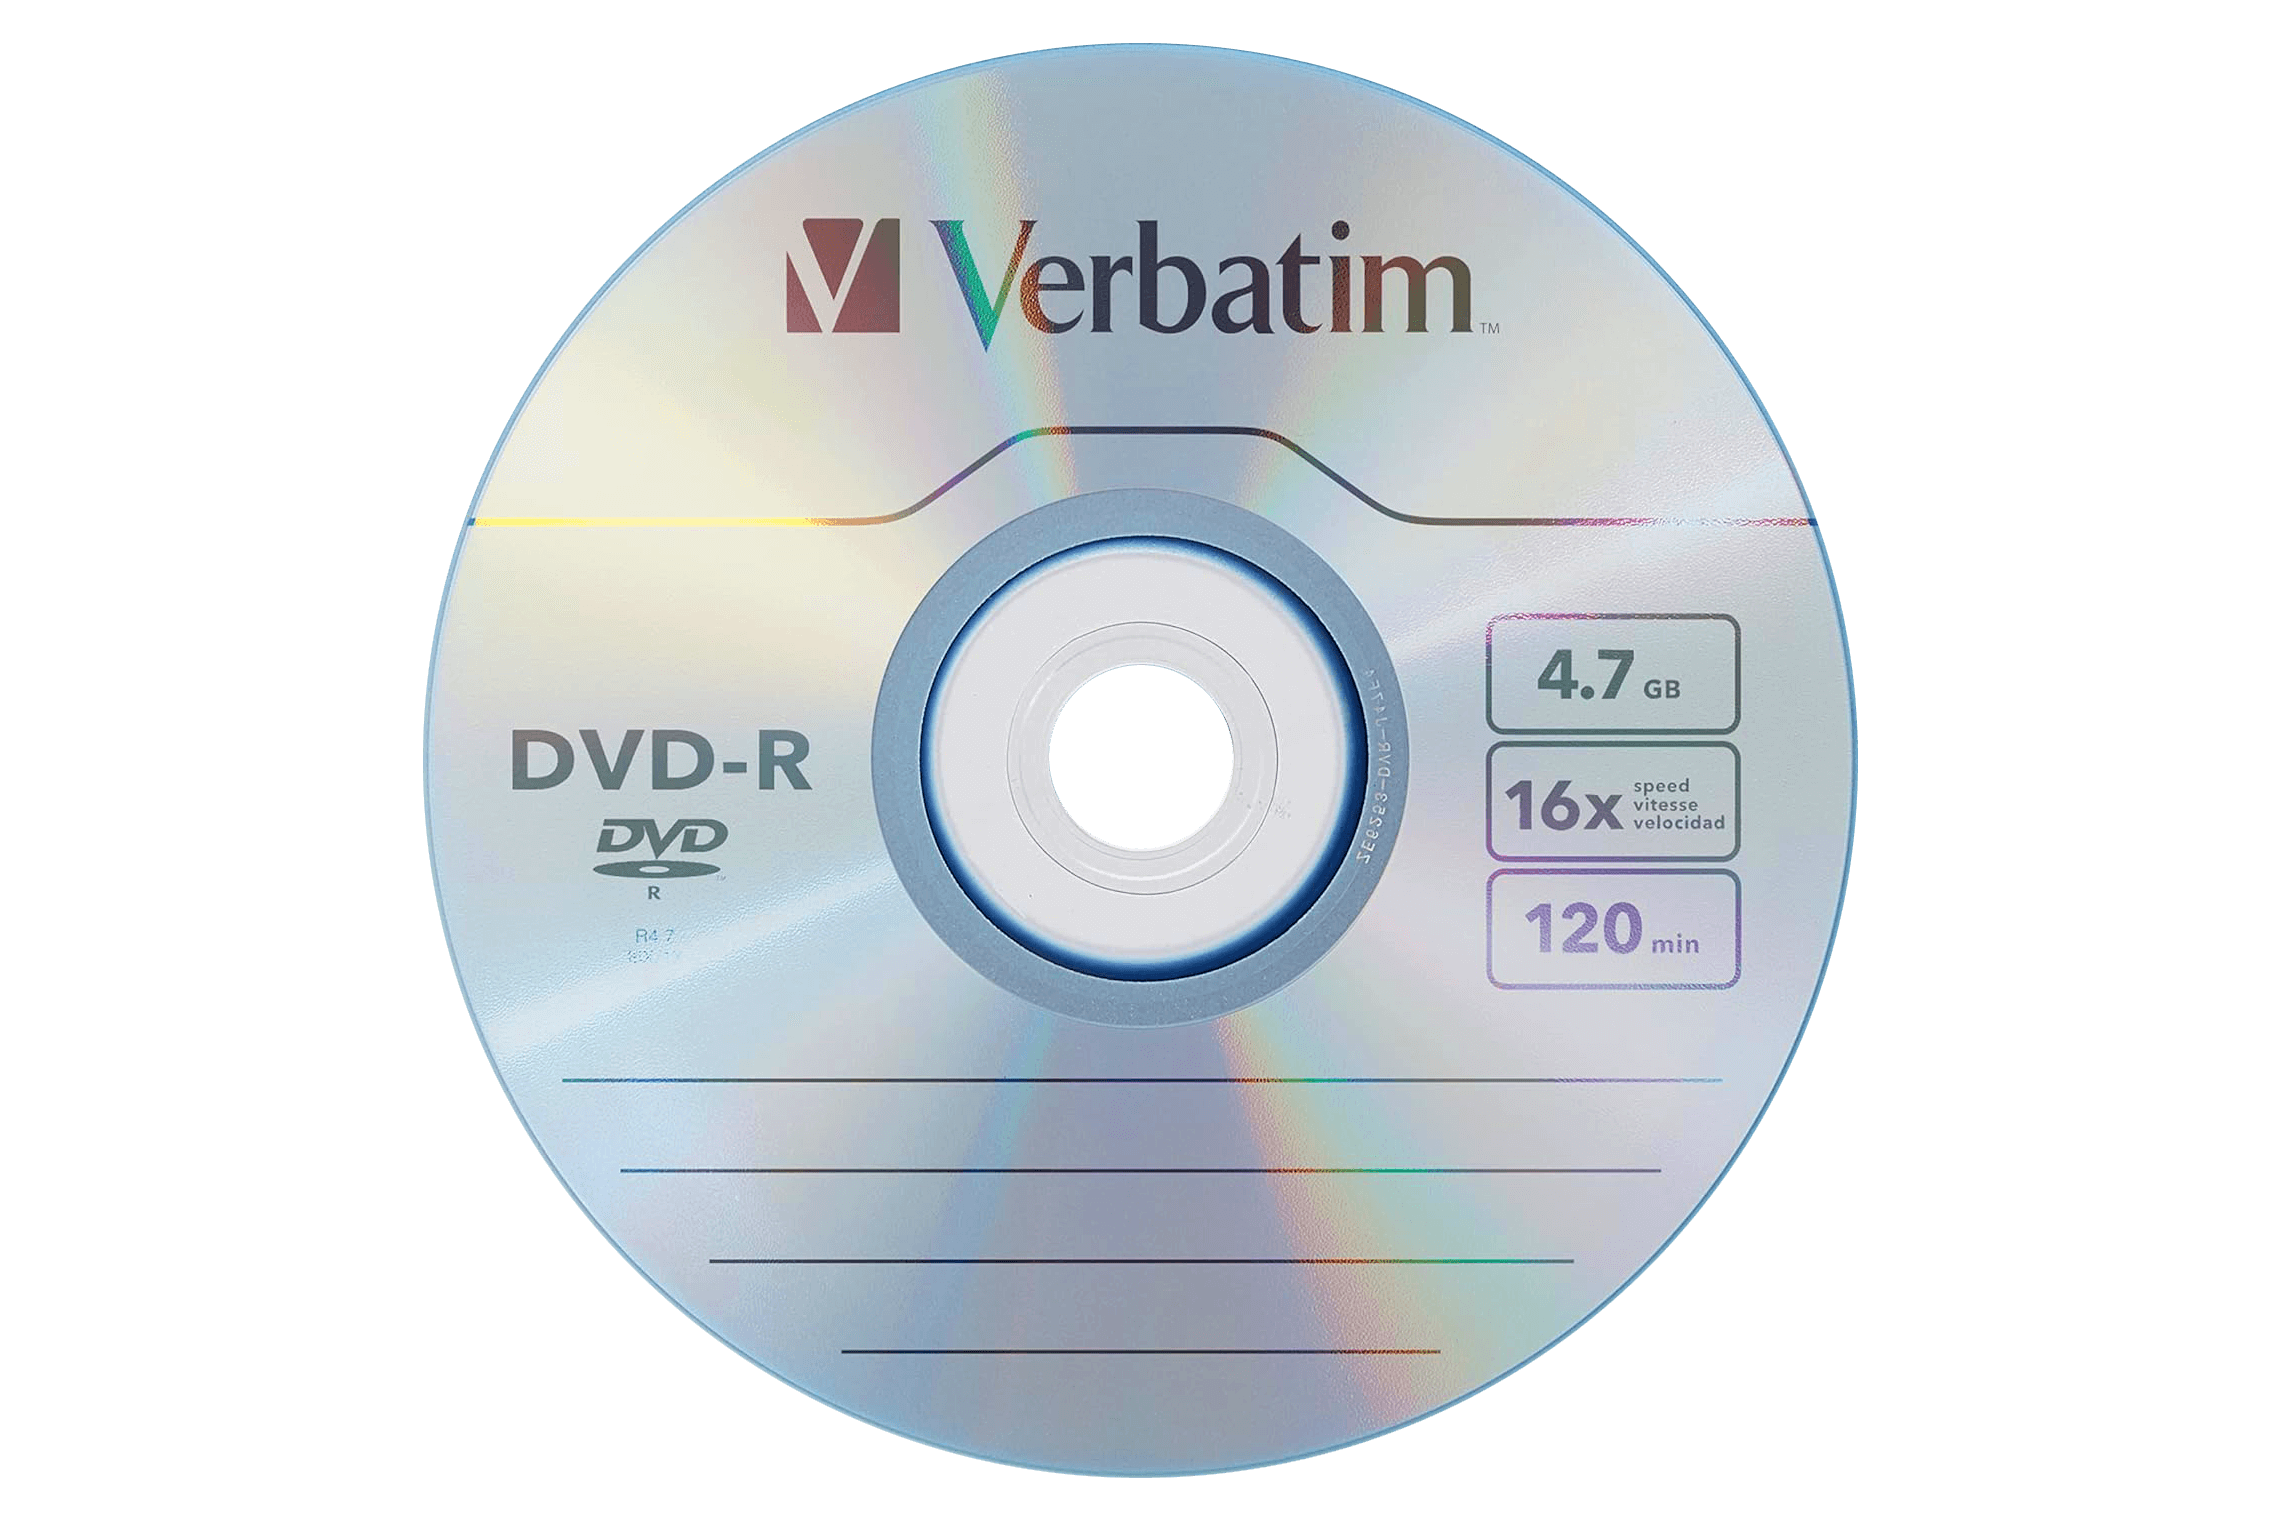 A CD-RW (Compact Disc-ReWritable) is a rewritable optical disc